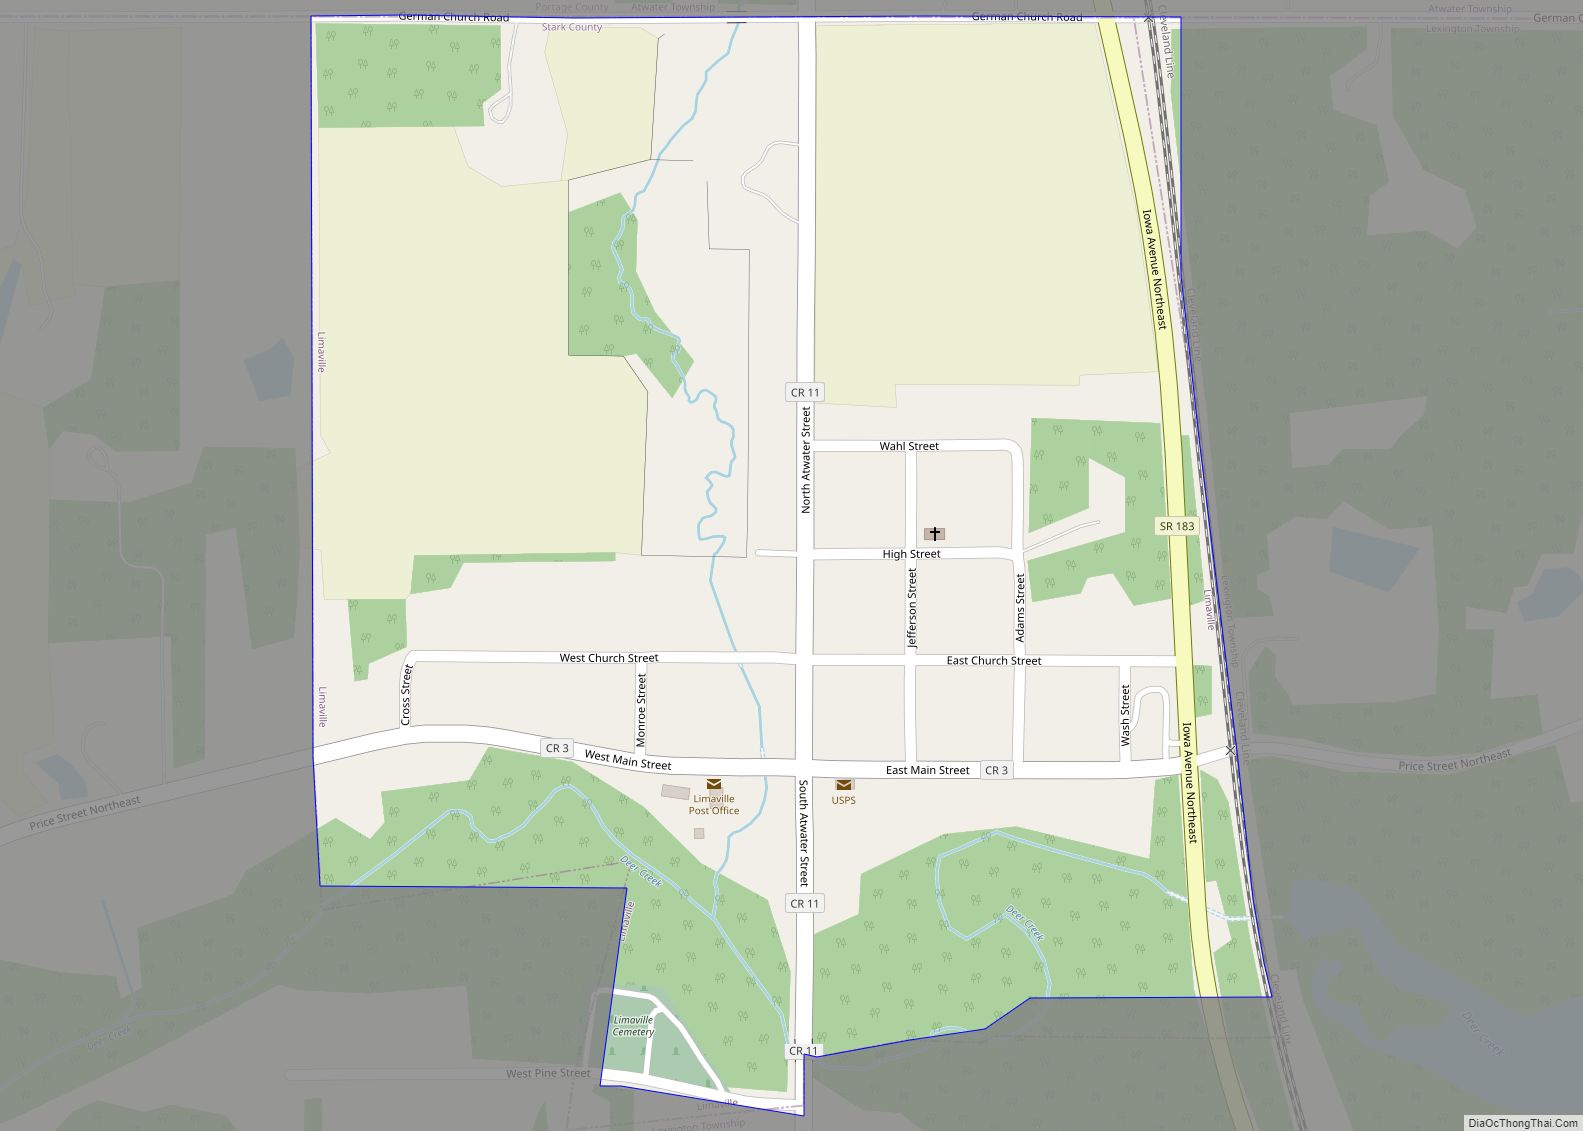 Map of Limaville village